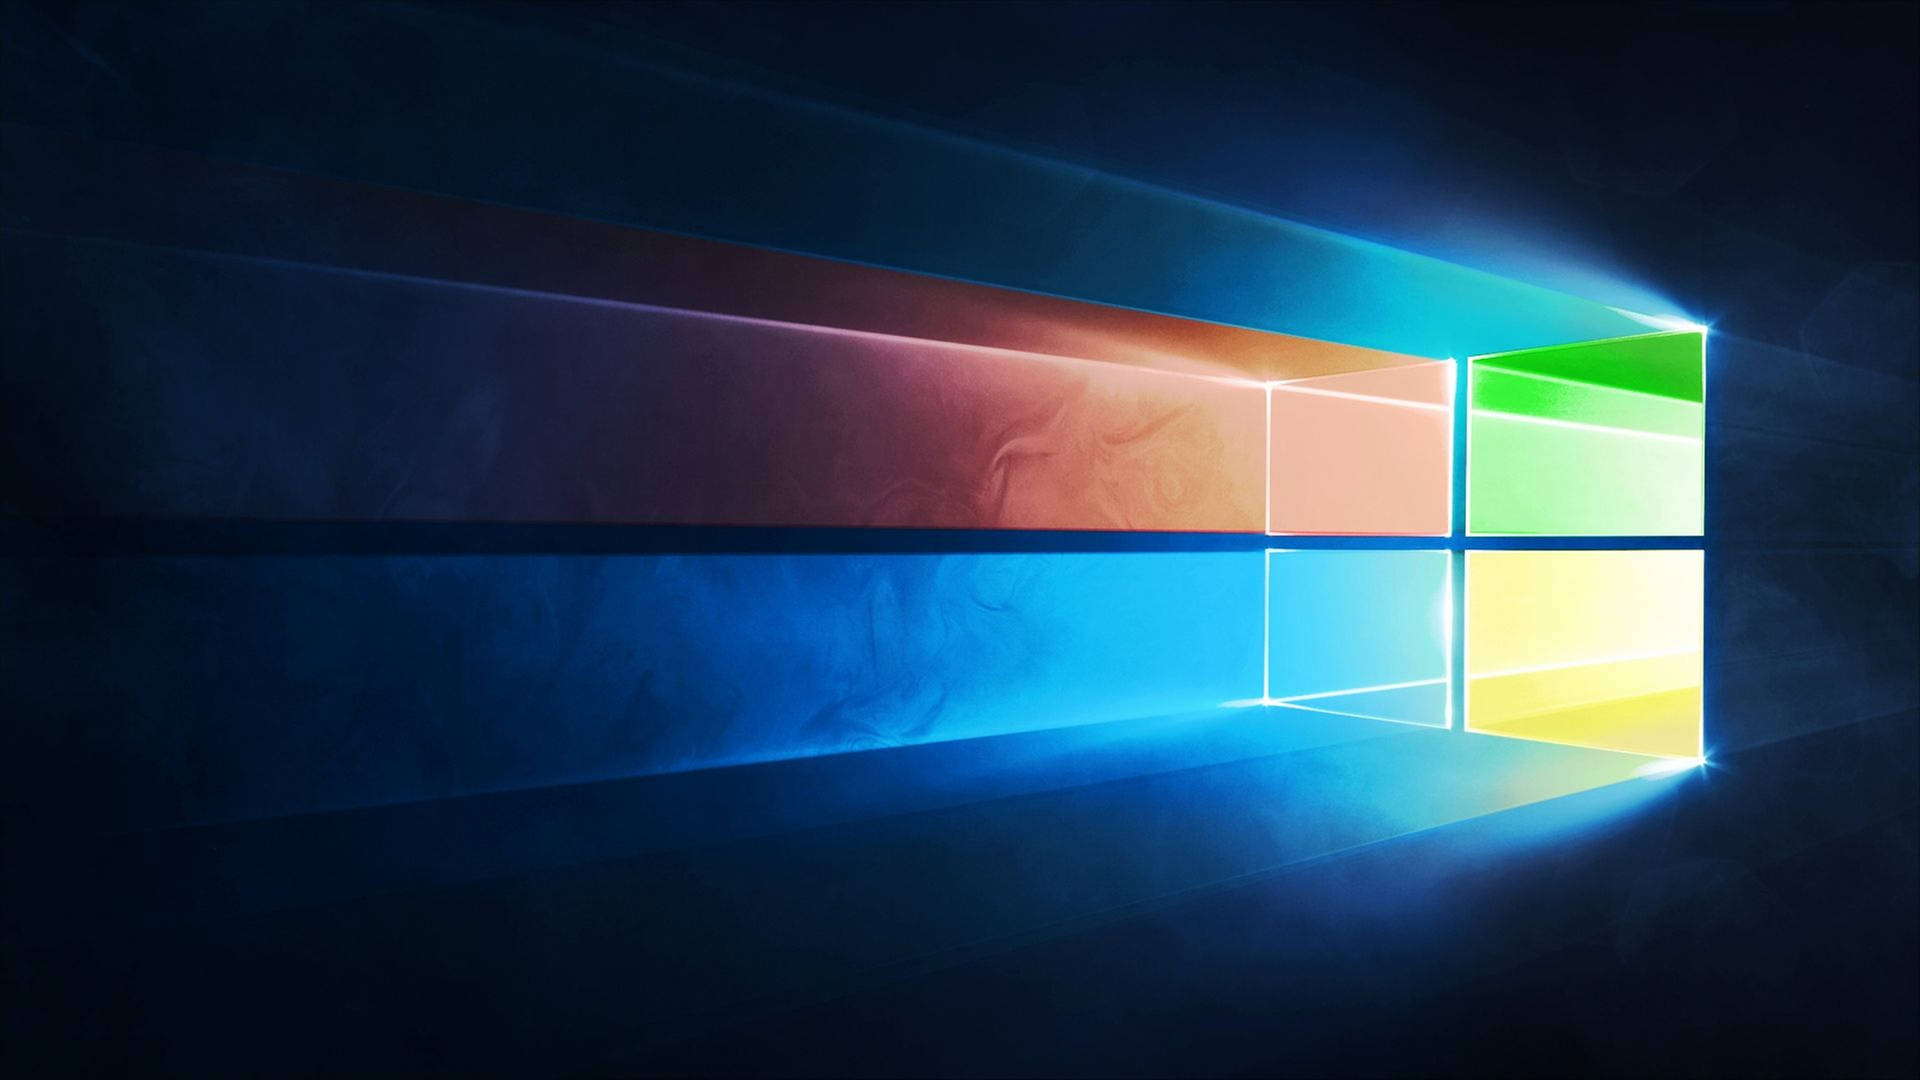 Vibrant Windows Logo On A Clean, Crisp 4k Background Wallpaper